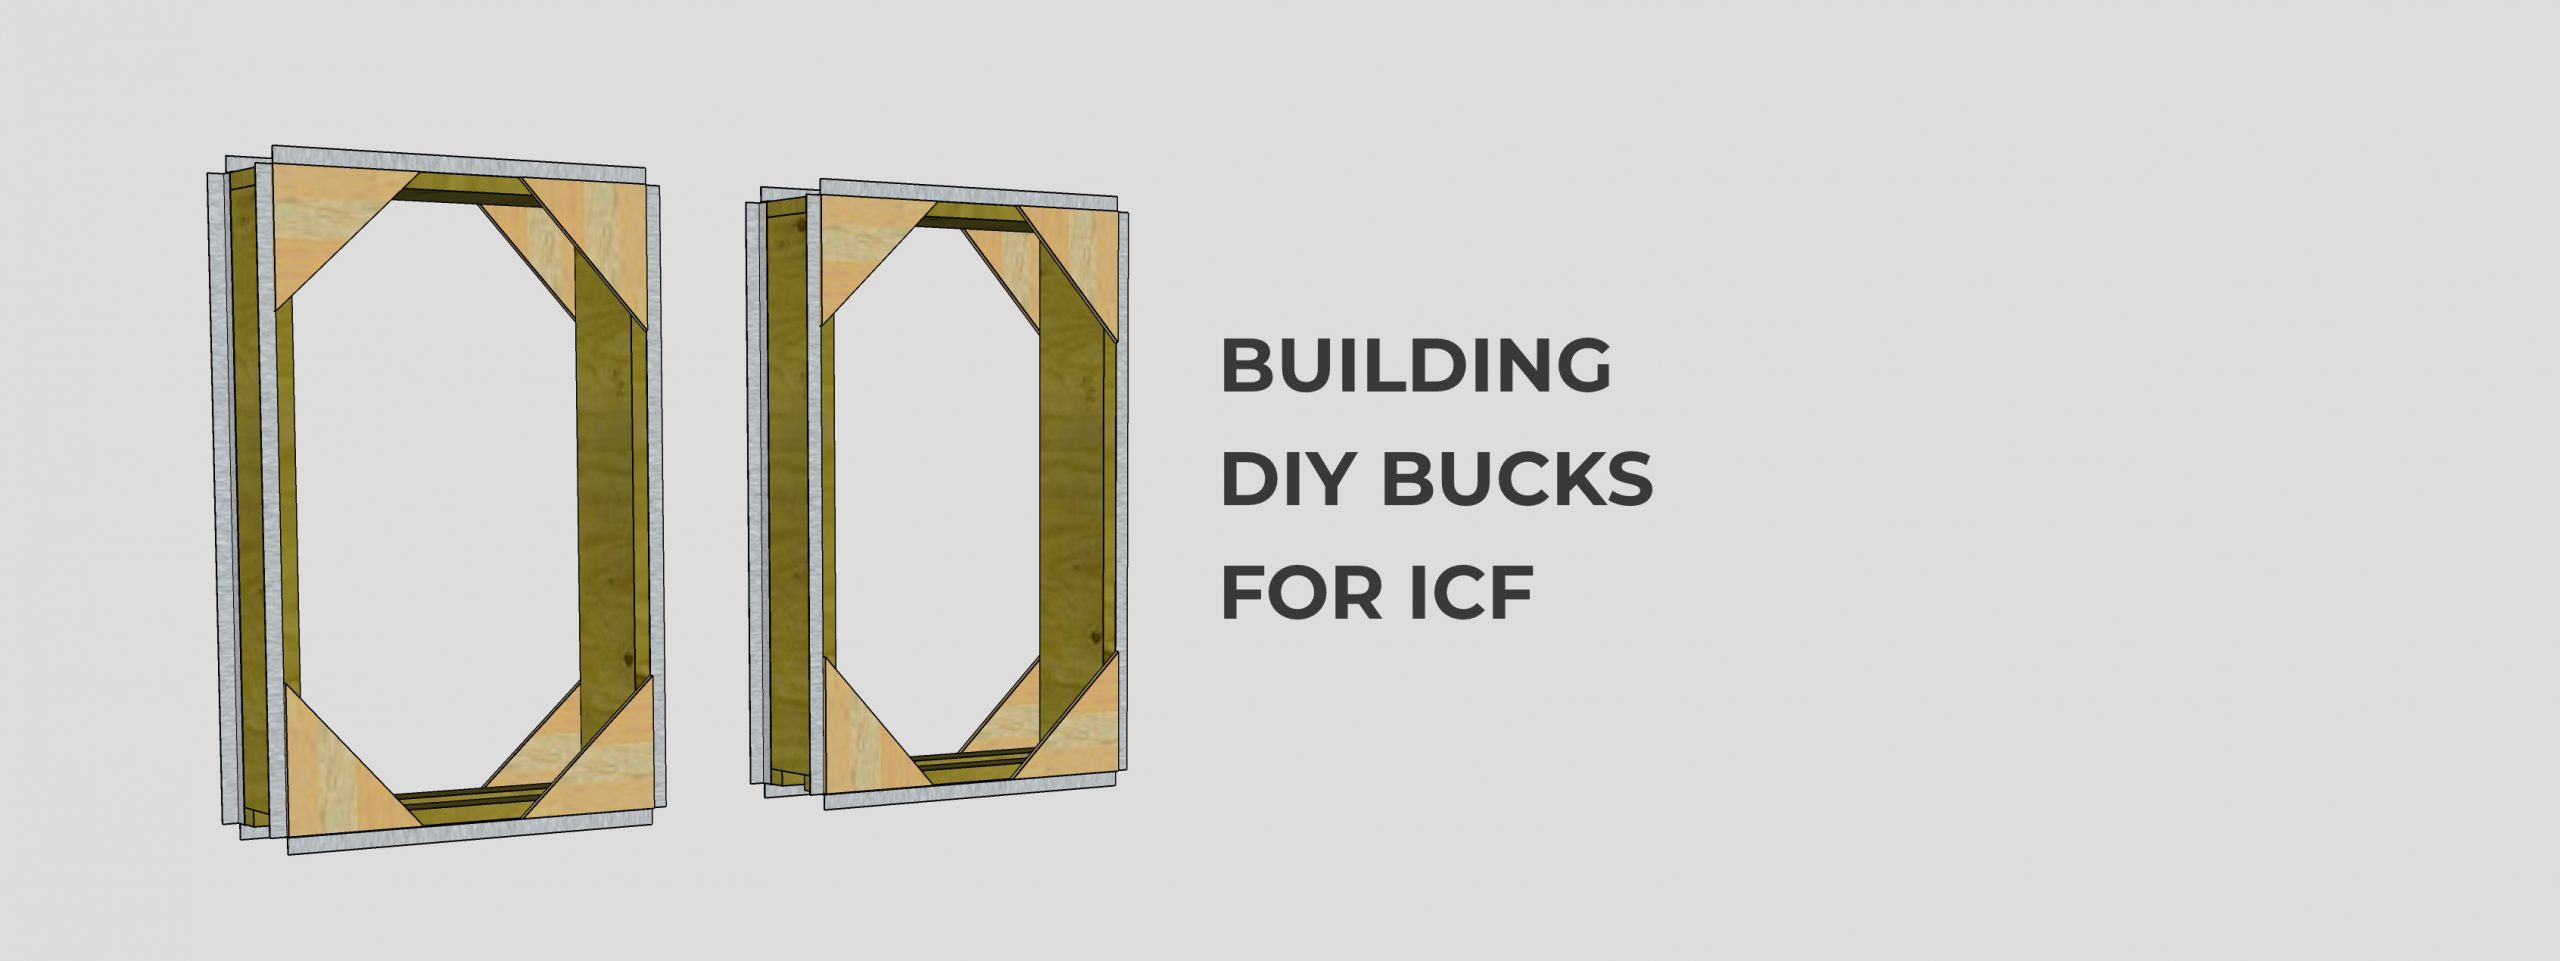 Building Simple Window Bucks for ICF